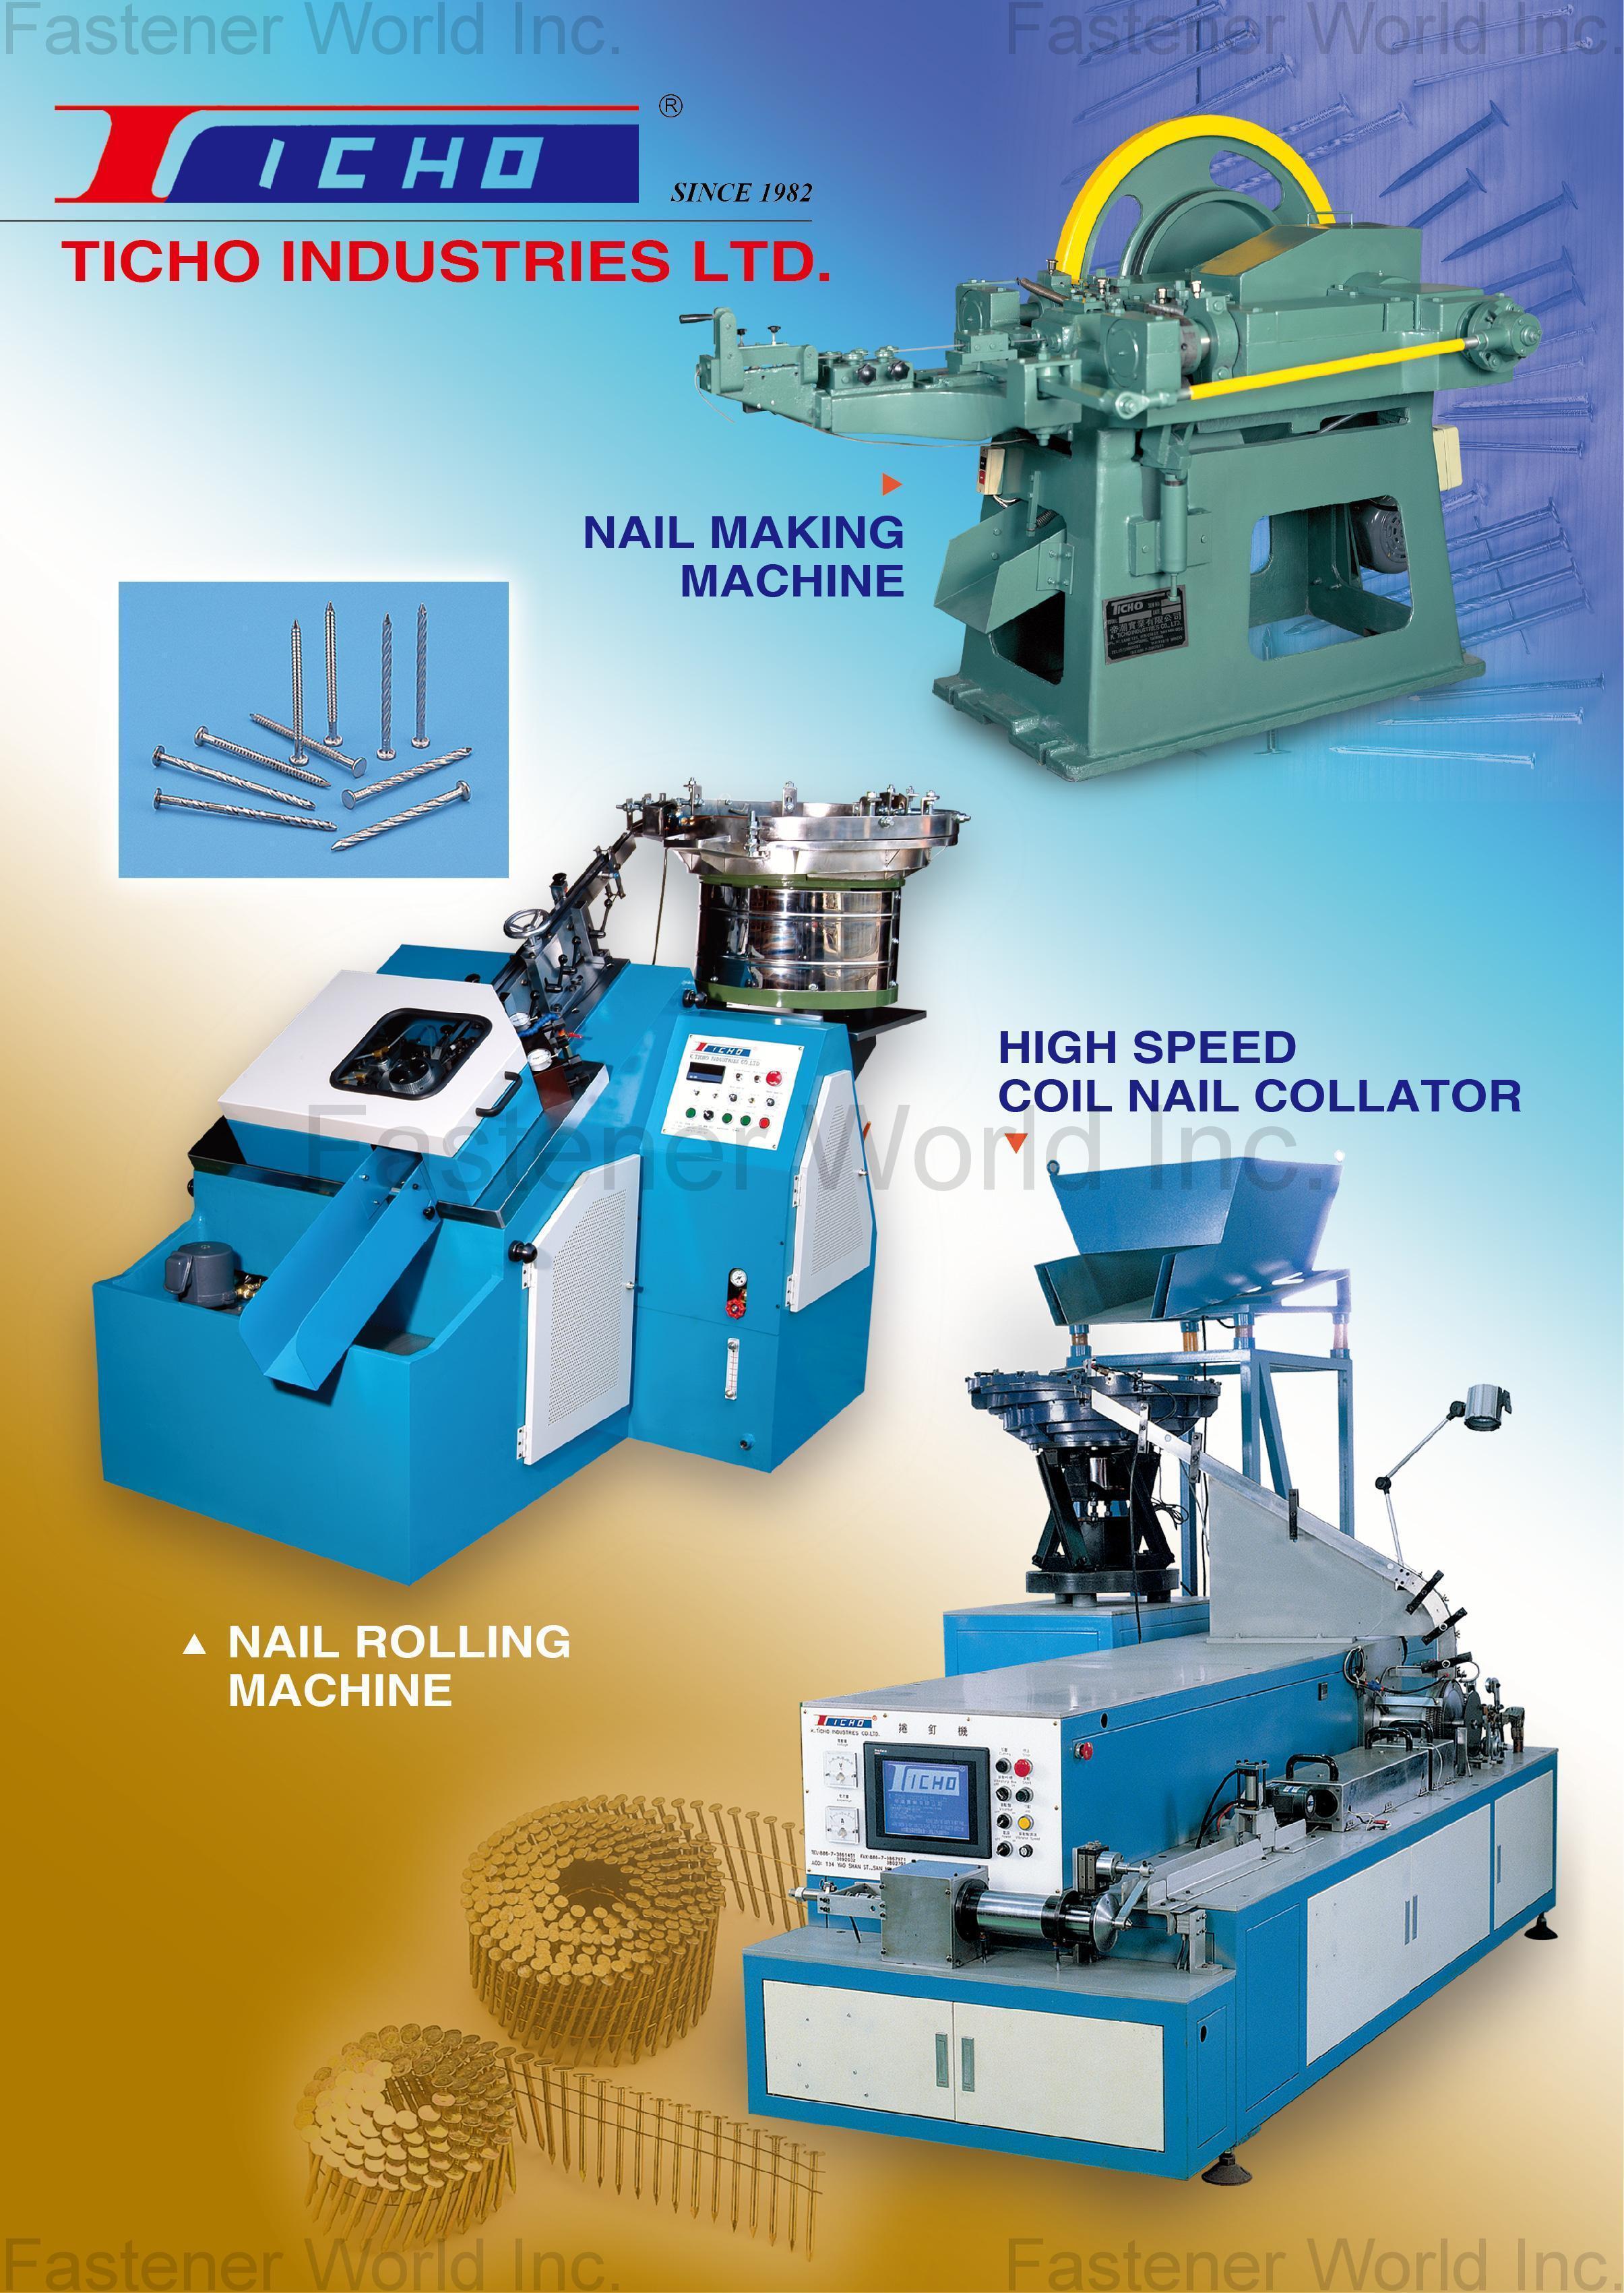 K. TICHO INDUSTRIES CO., LTD.  , Nail, Making Machine, High Speed Coil Nail Collator, Nail Rolling Machine , Nail Manufacturing Machinery